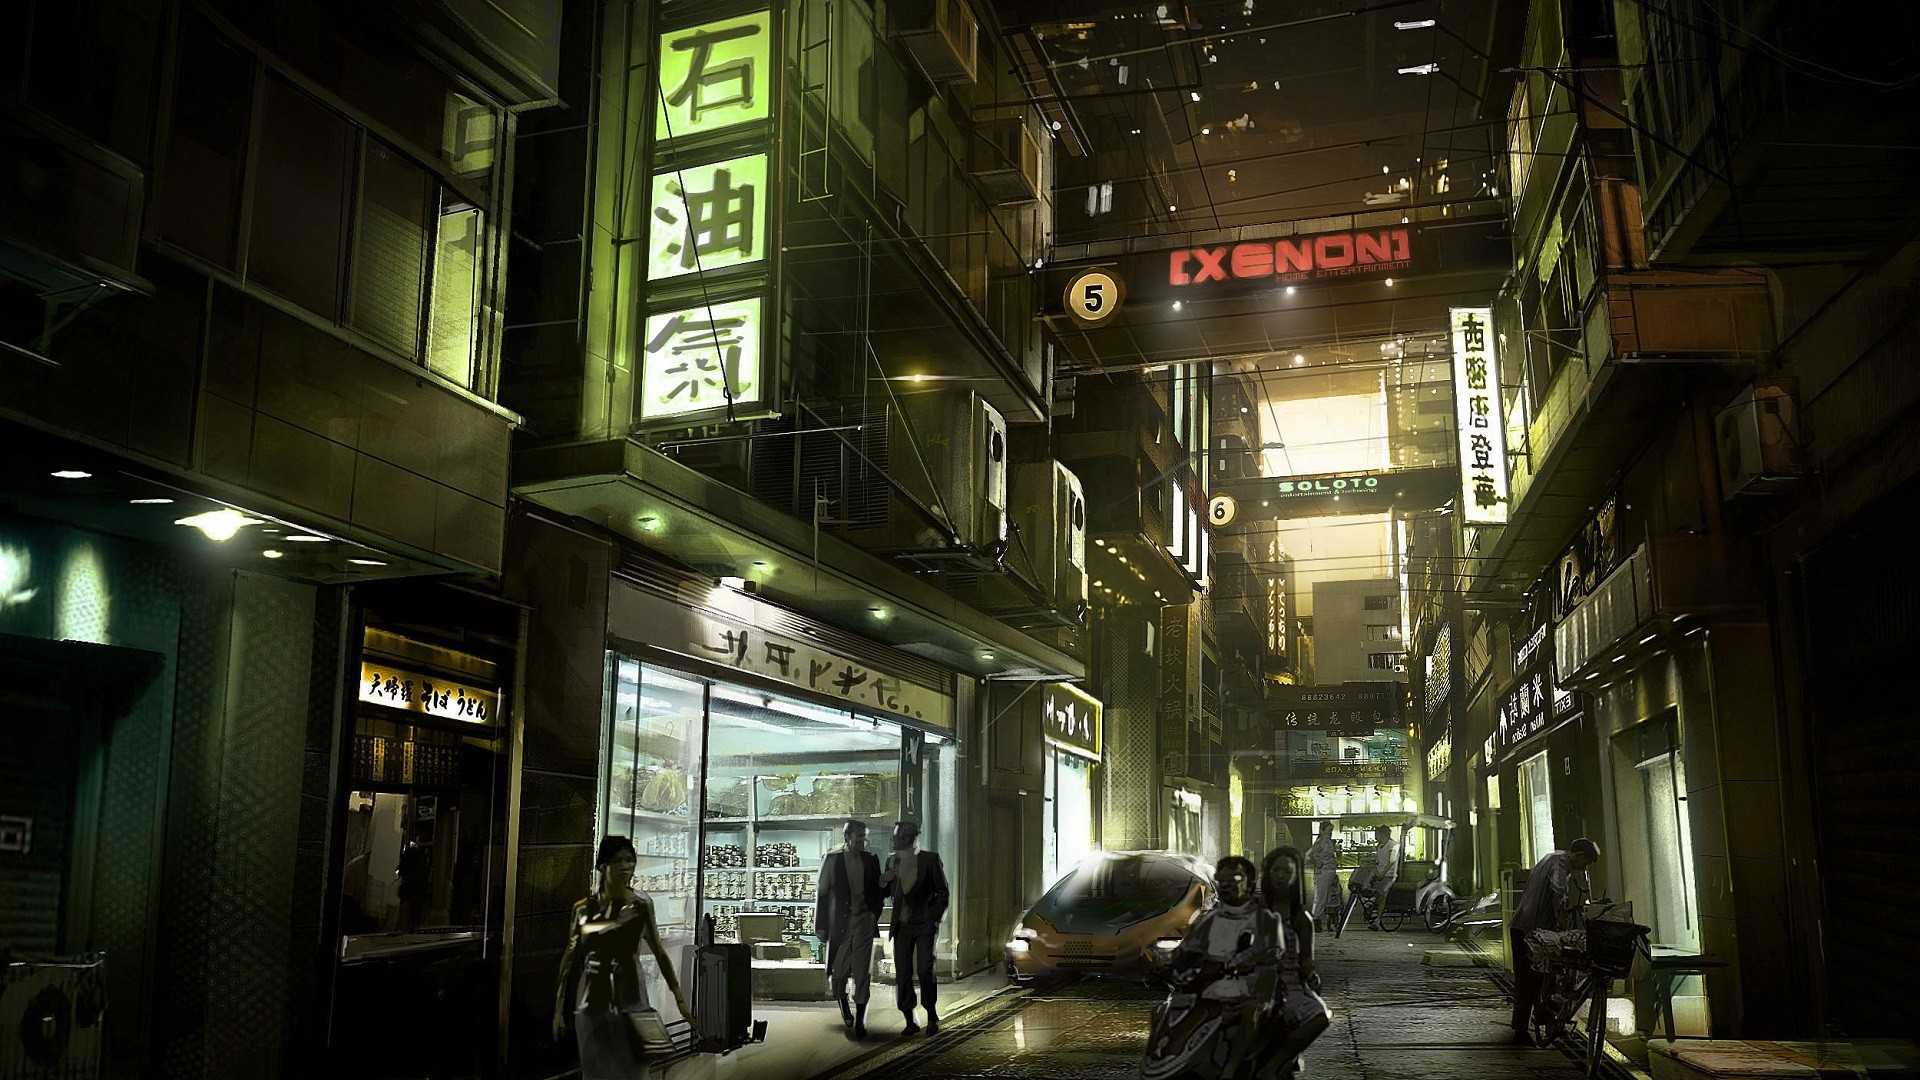 General 1920x1080 cyberpunk futuristic Deus Ex: Human Revolution futuristic city Japan Asia urban street PC gaming video game art concept art artwork science fiction